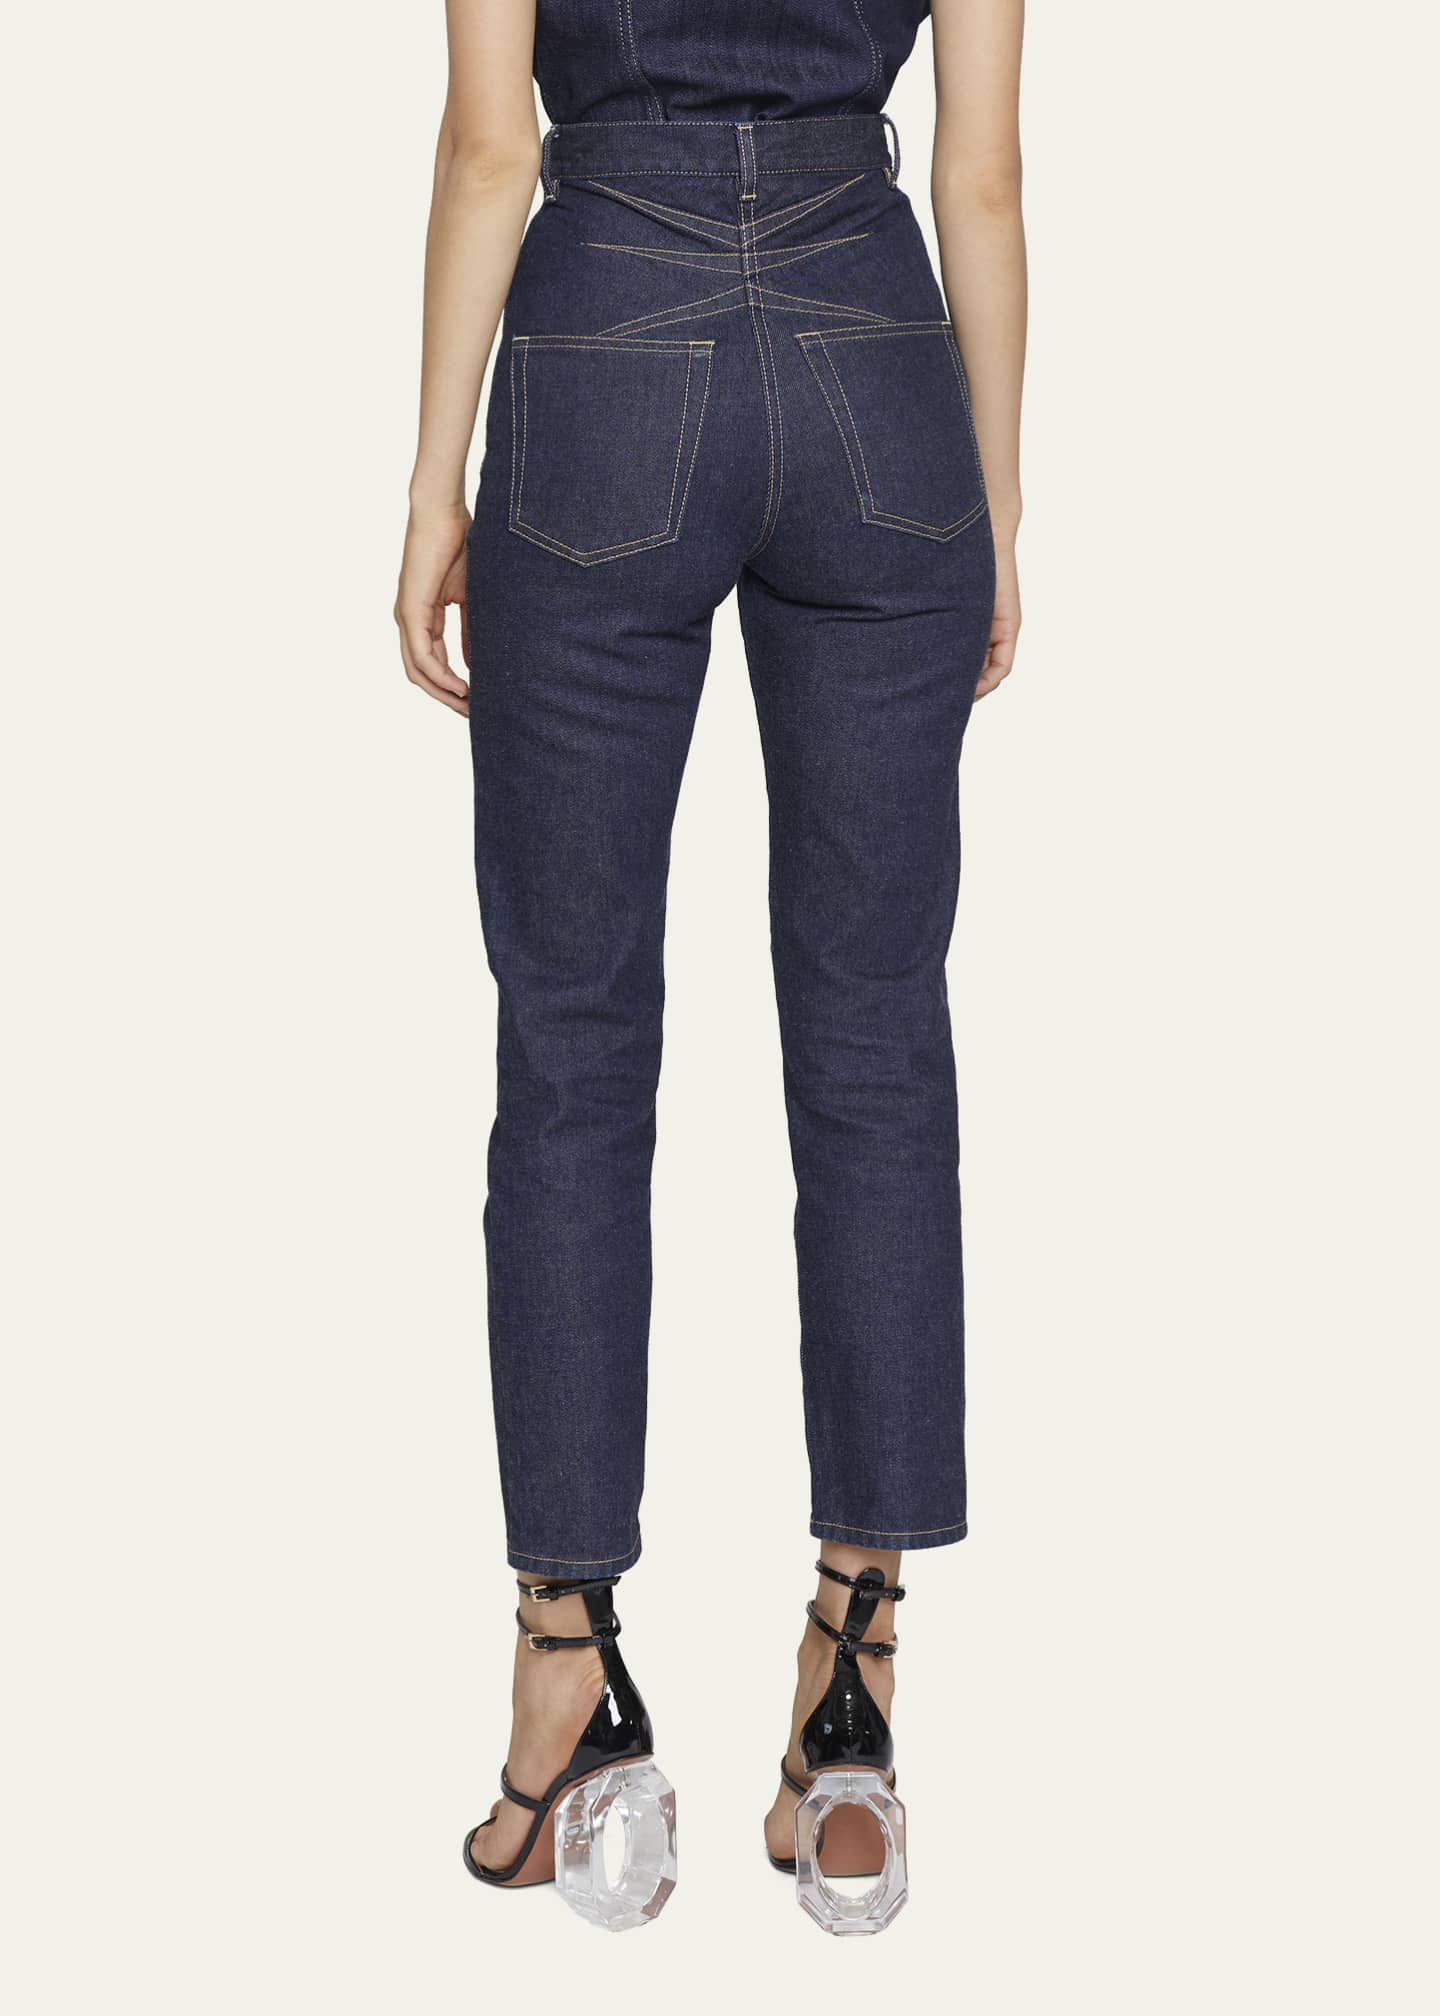 ALAÏA Women's Iconic Denim Jeans